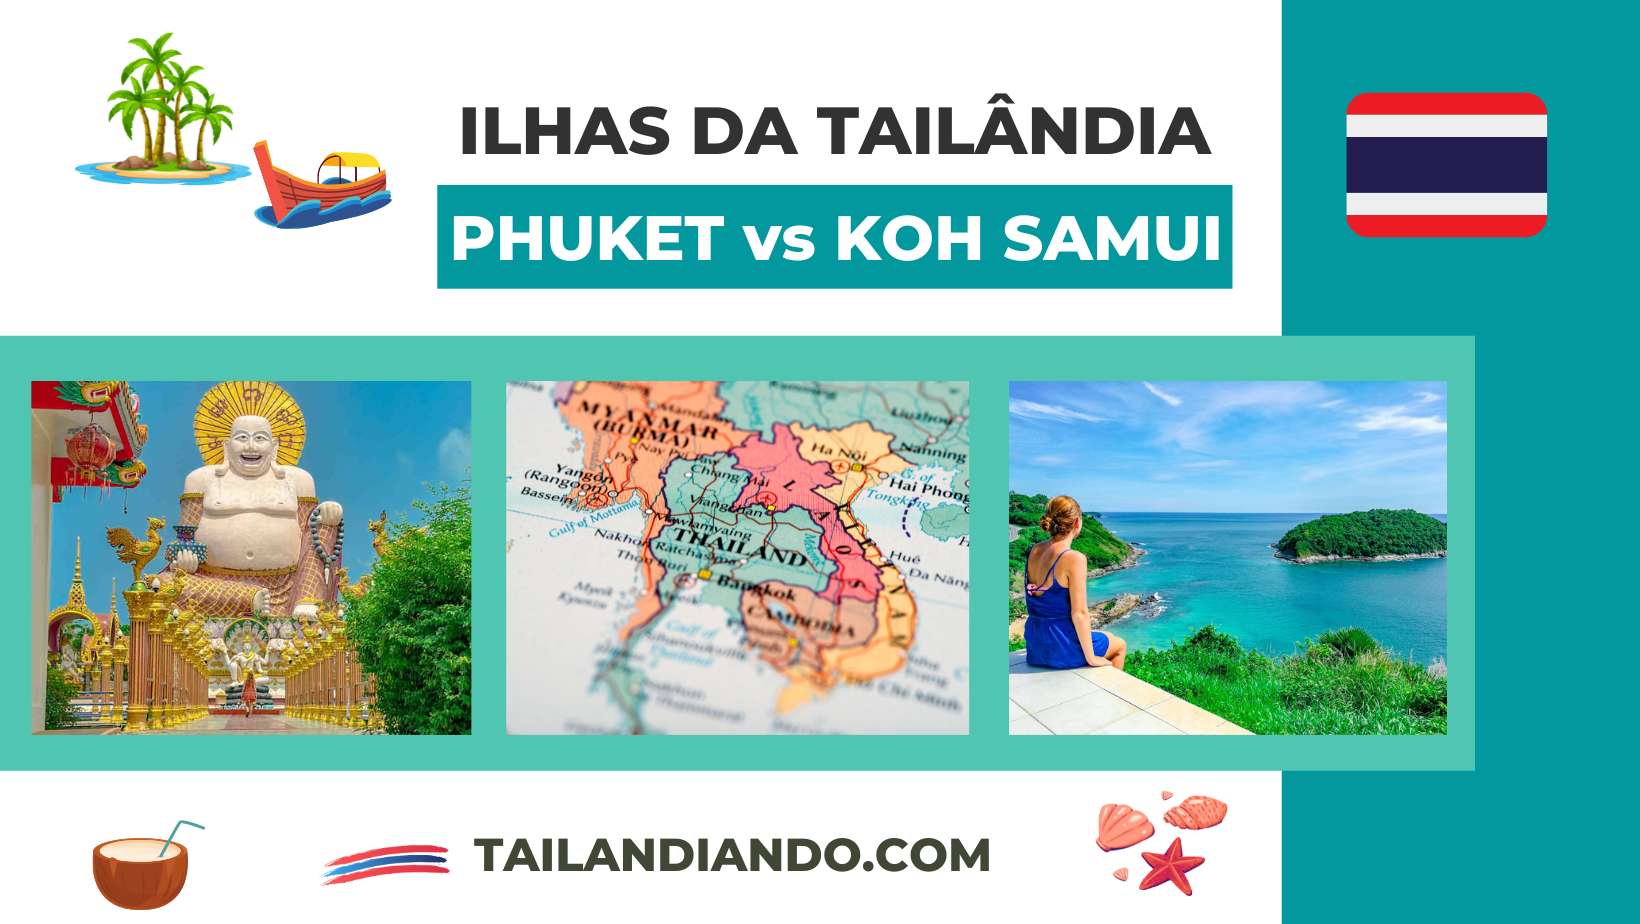 Phuket ou Koh Samui - qual ilha escolher na Tailândia